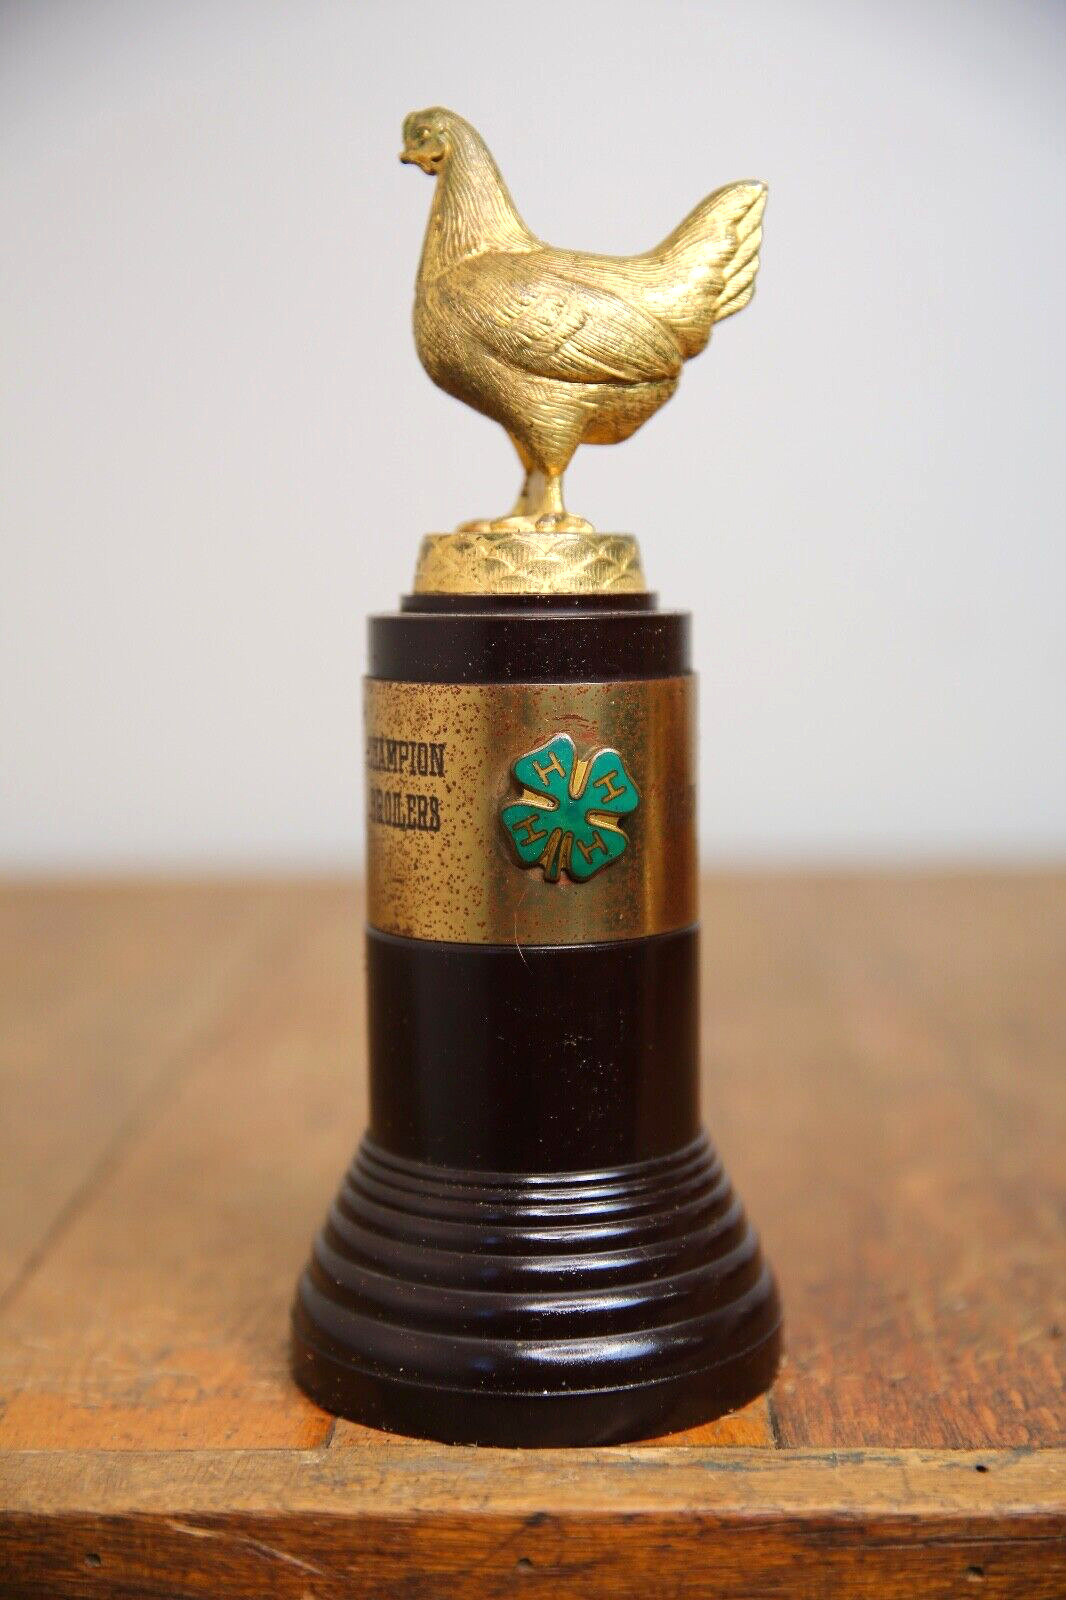 Vintage 1956 Champion Broilers Chicken Farm Brass Trophy 4H Award Fort Wayne